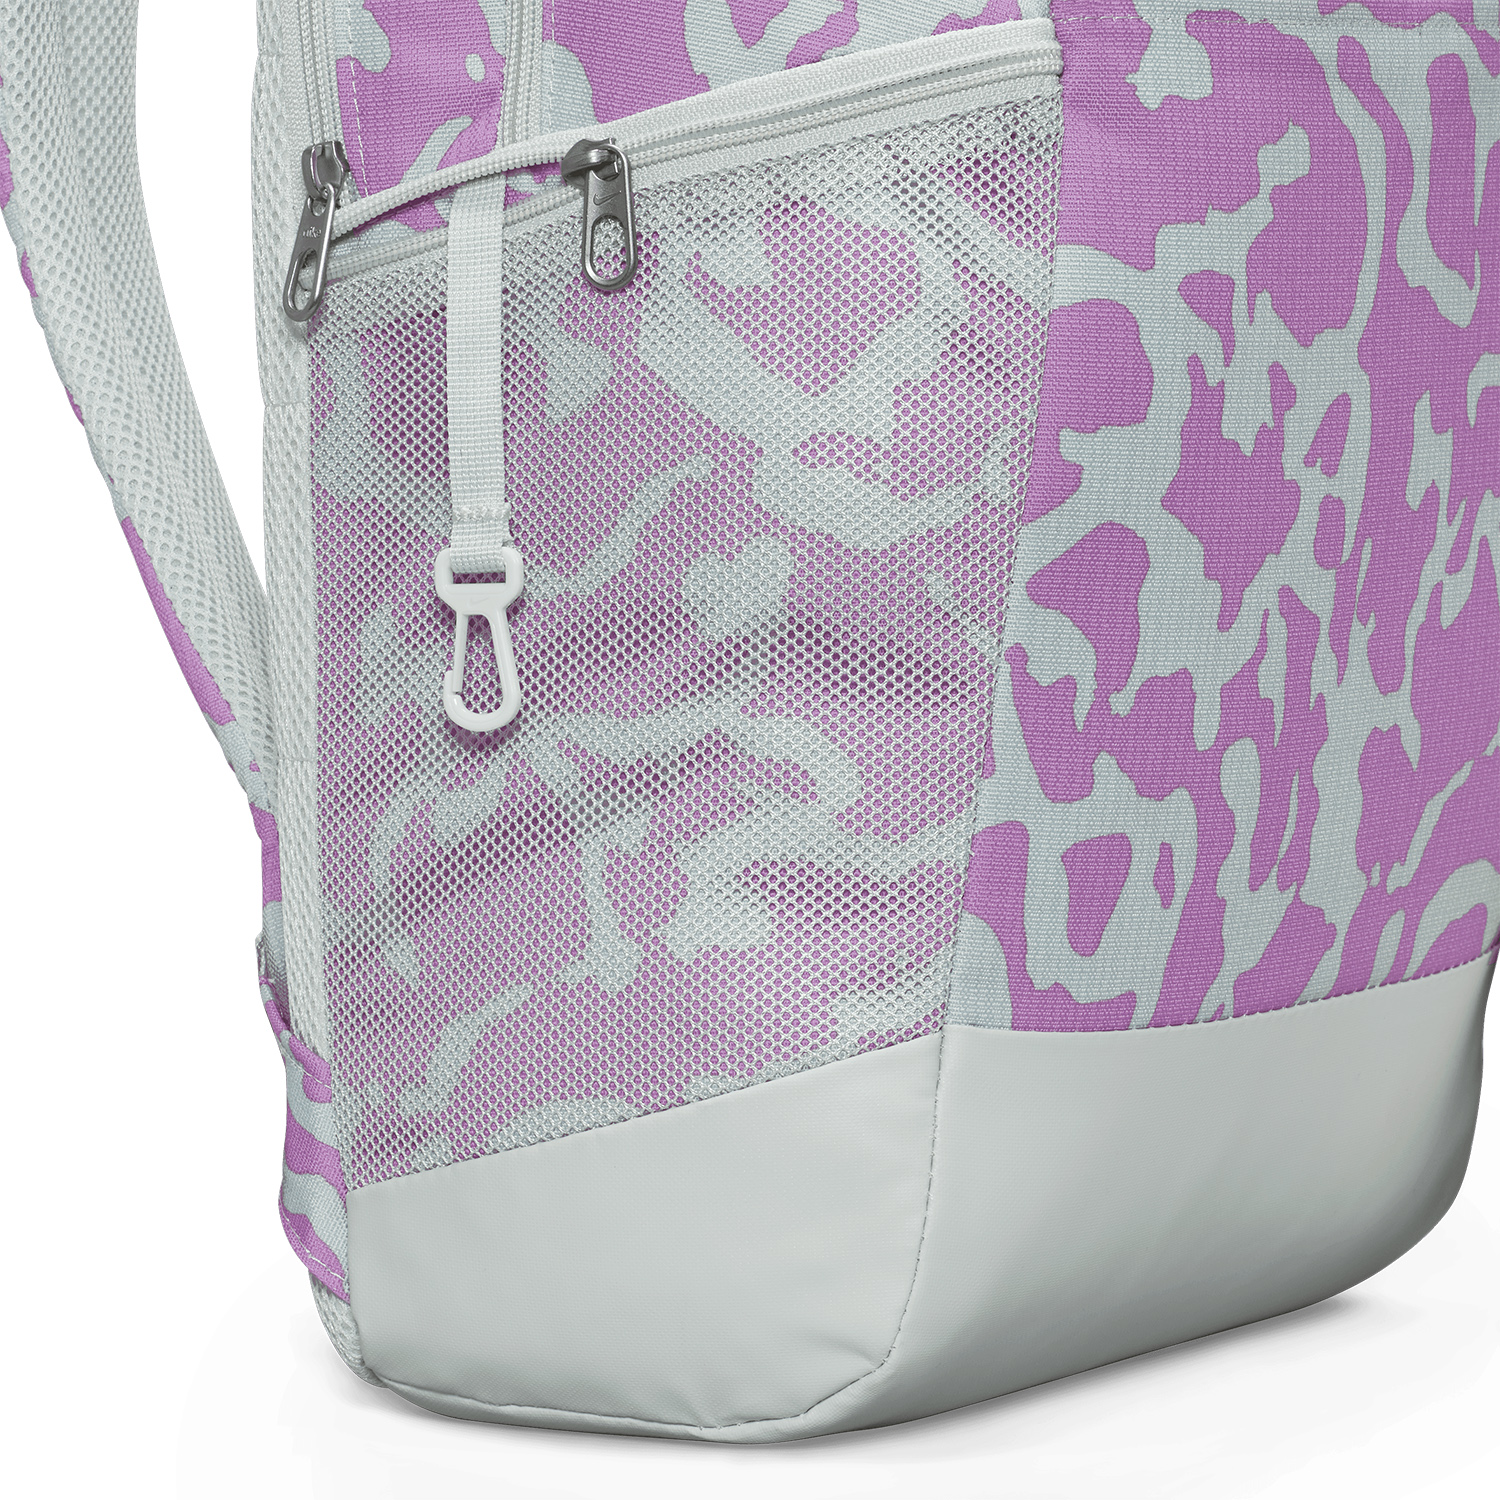 Nike Brasilia Printed Backpack - Light Silver/Rush Fuchsia/White